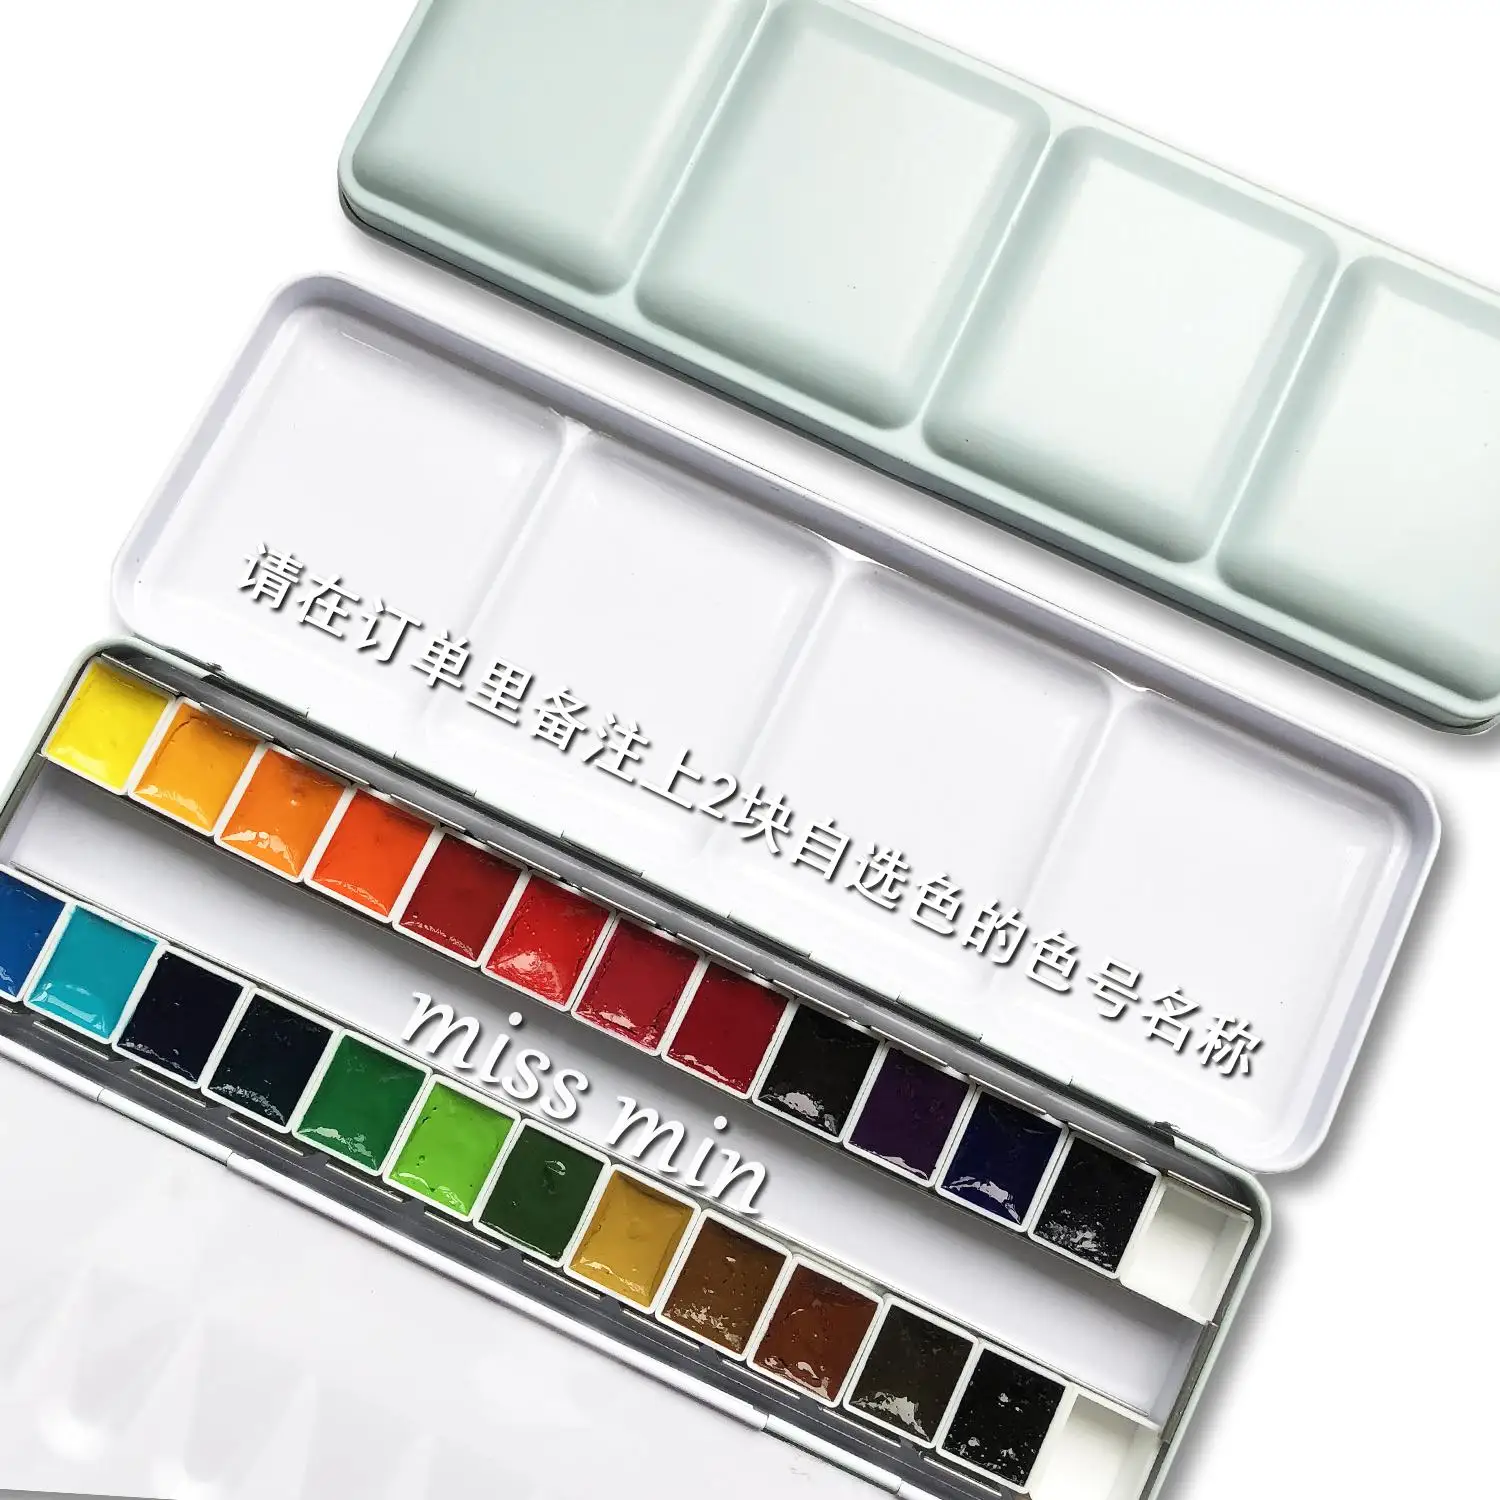 Mg M. graham& Co, цветные пигменты Verf Artist Sulu Boya, 1 мл, 2 мл, 24 цвета, водная цветная палитра, краски, подупаковка - Цвет: 1mlGreen iron box